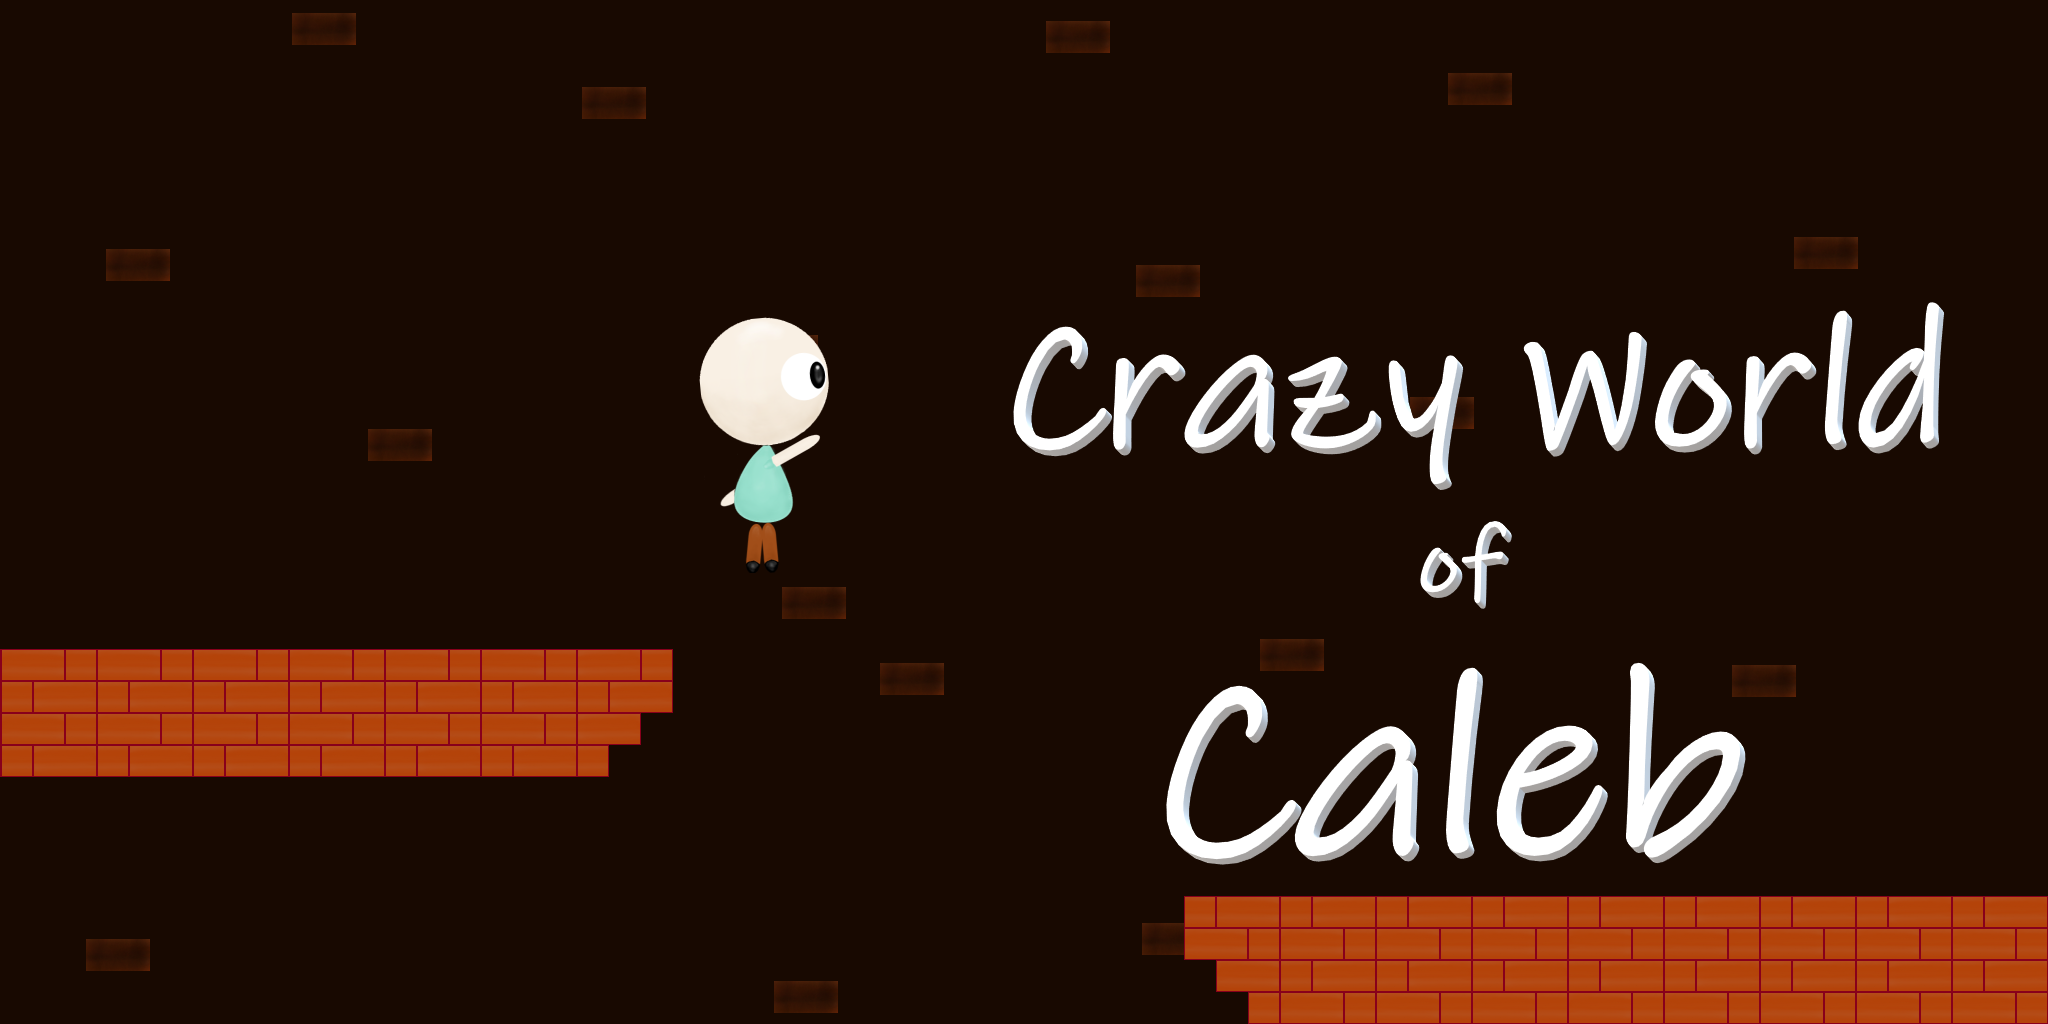 Crazy World of Caleb